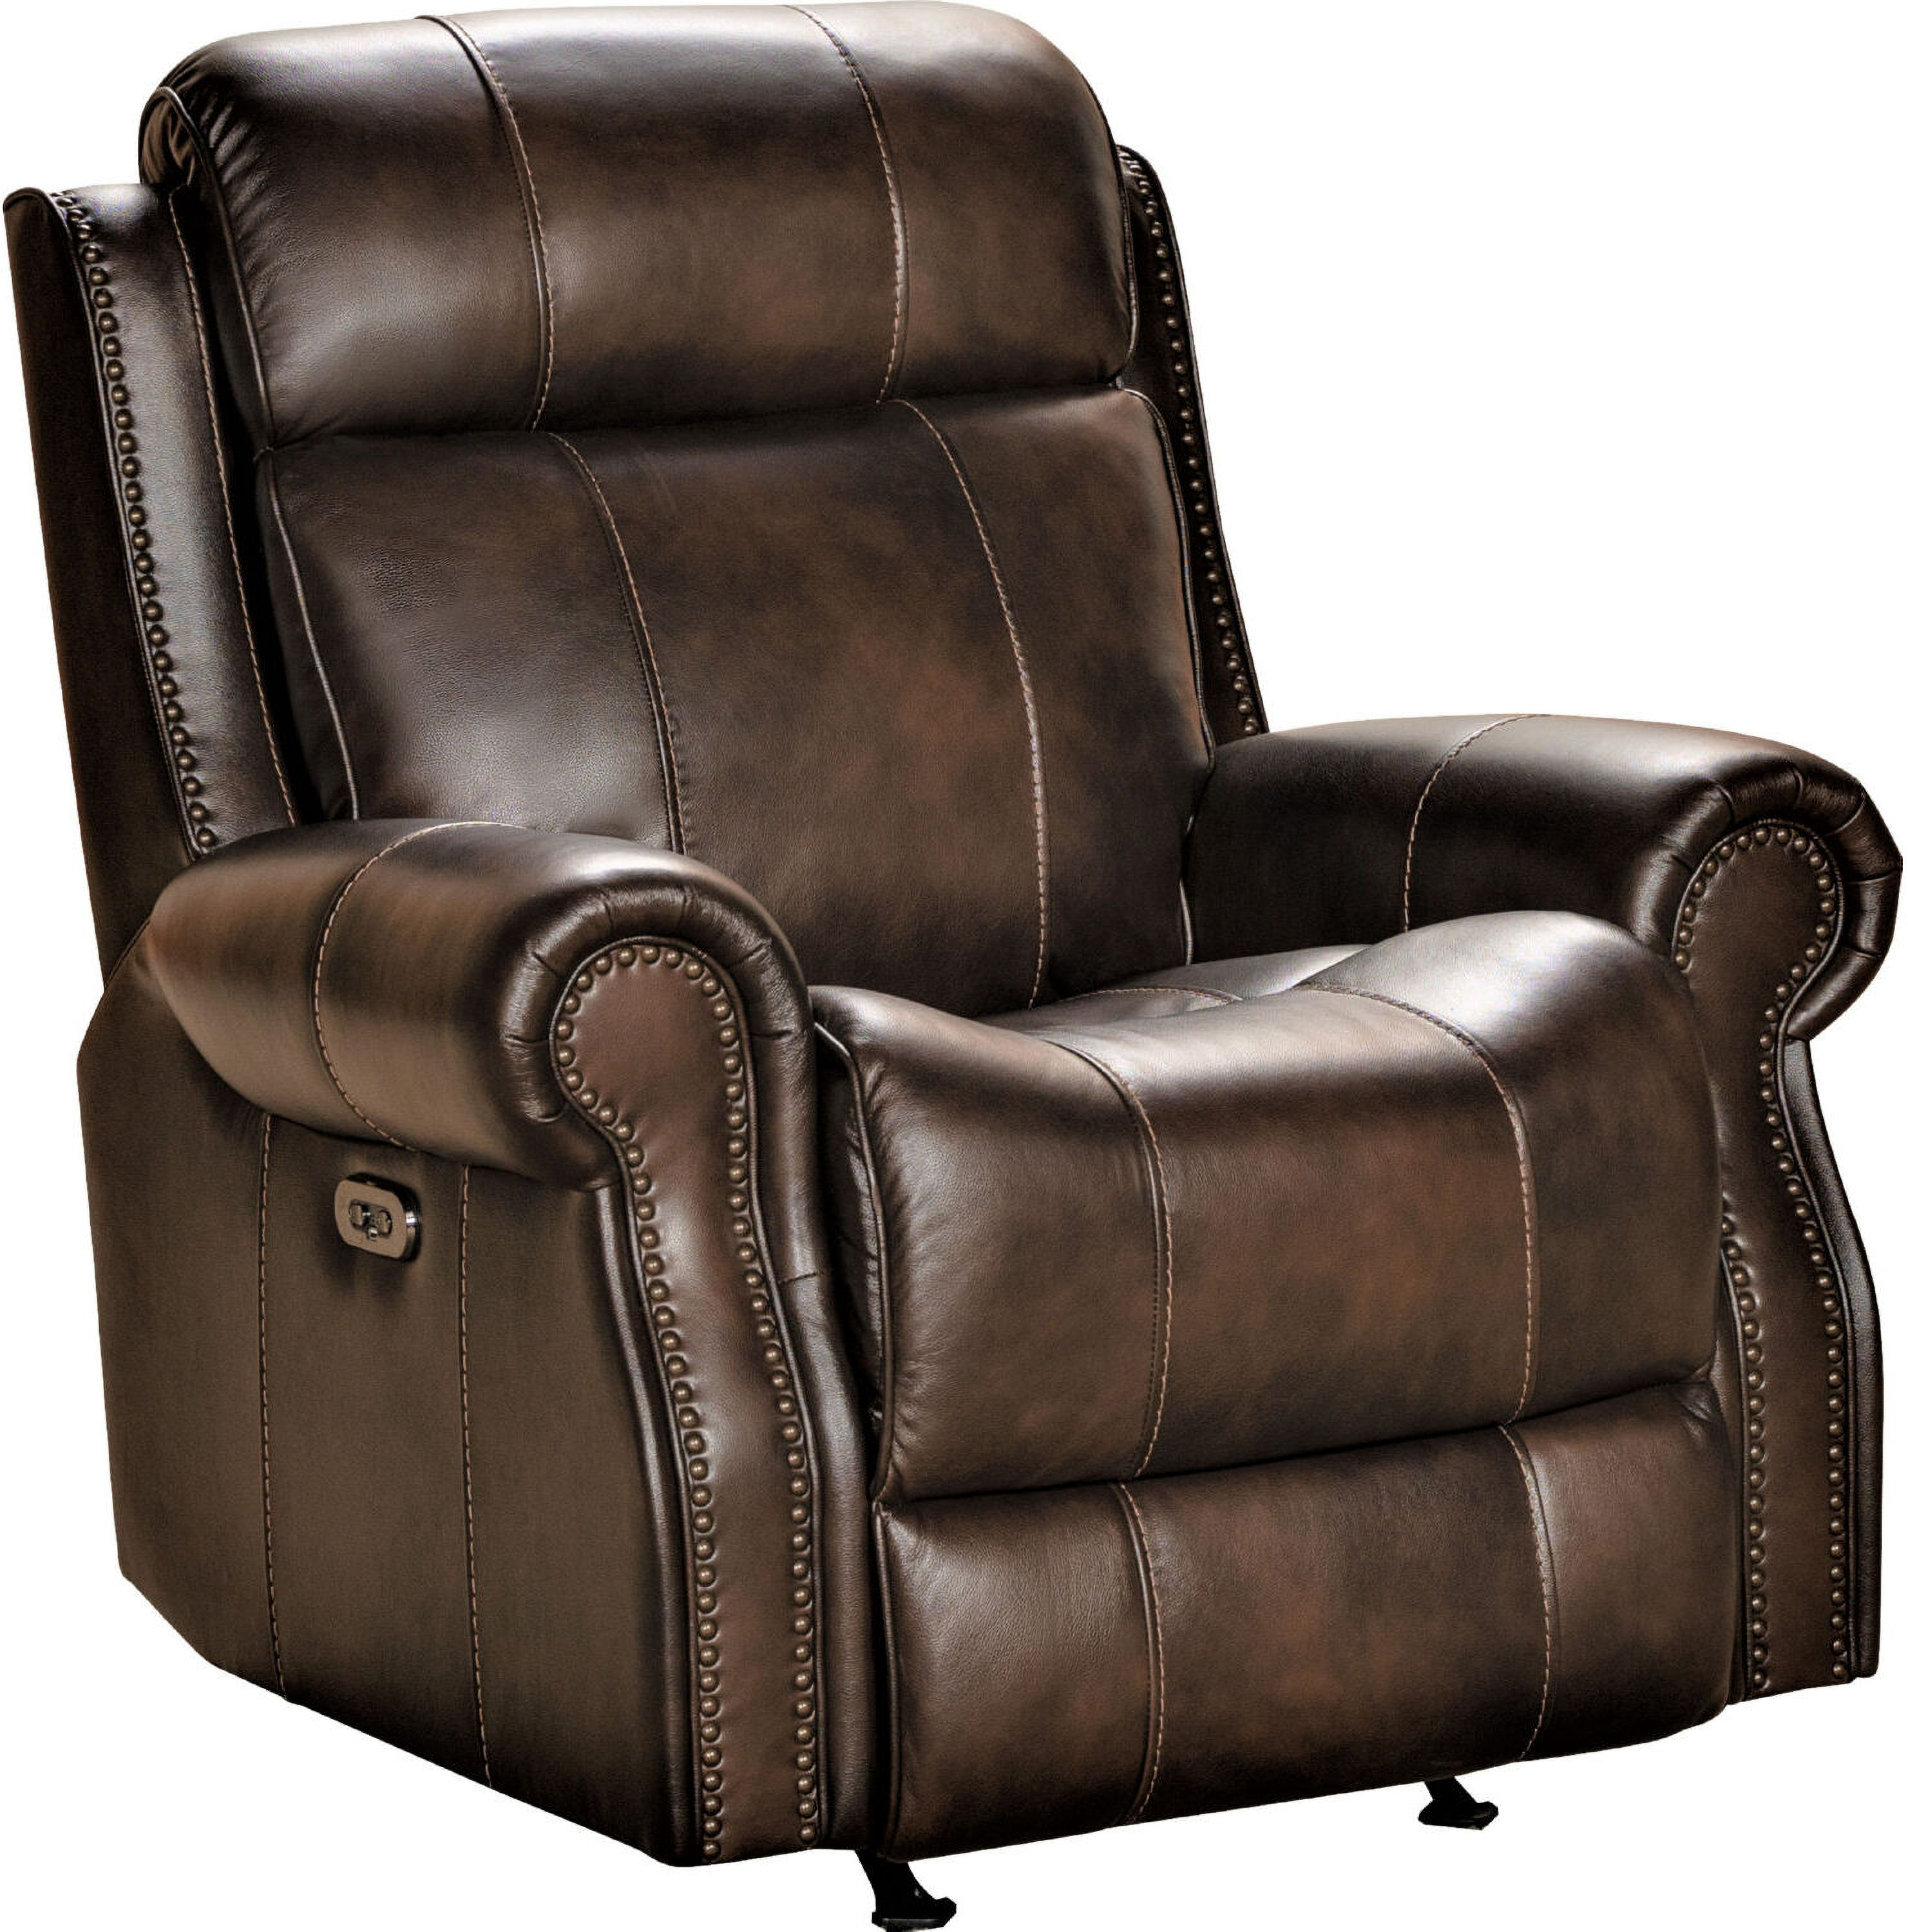 https://cdn.1stopbedrooms.com/media/catalog/product/d/e/demara-rocker-recliner-in-tonya-brown-leather_qb13213019.jpg